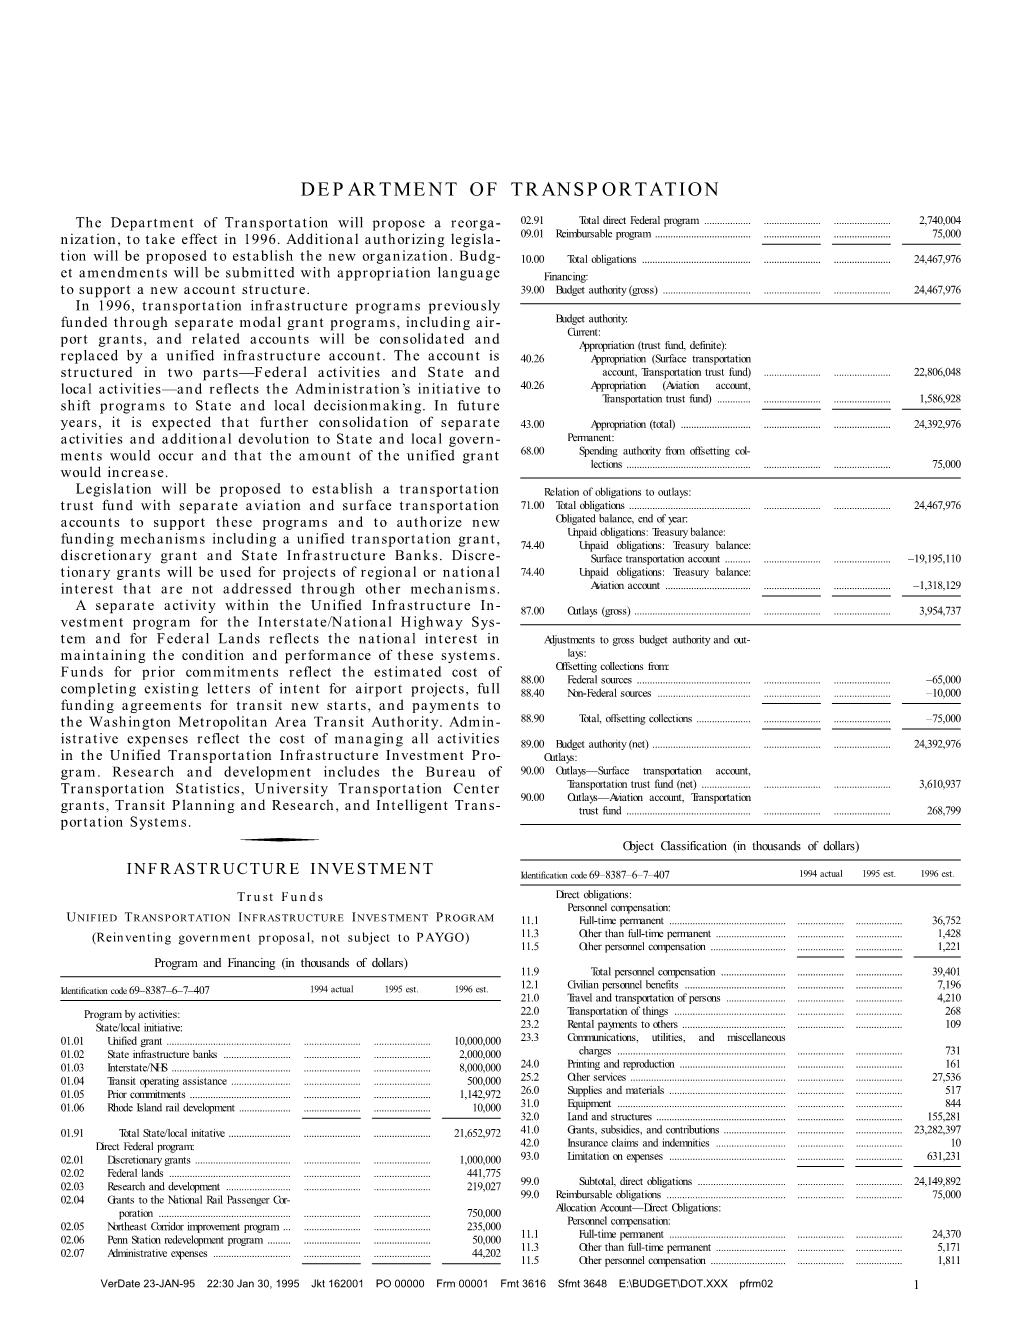 FY 1996 Appendix: Department of Transportation